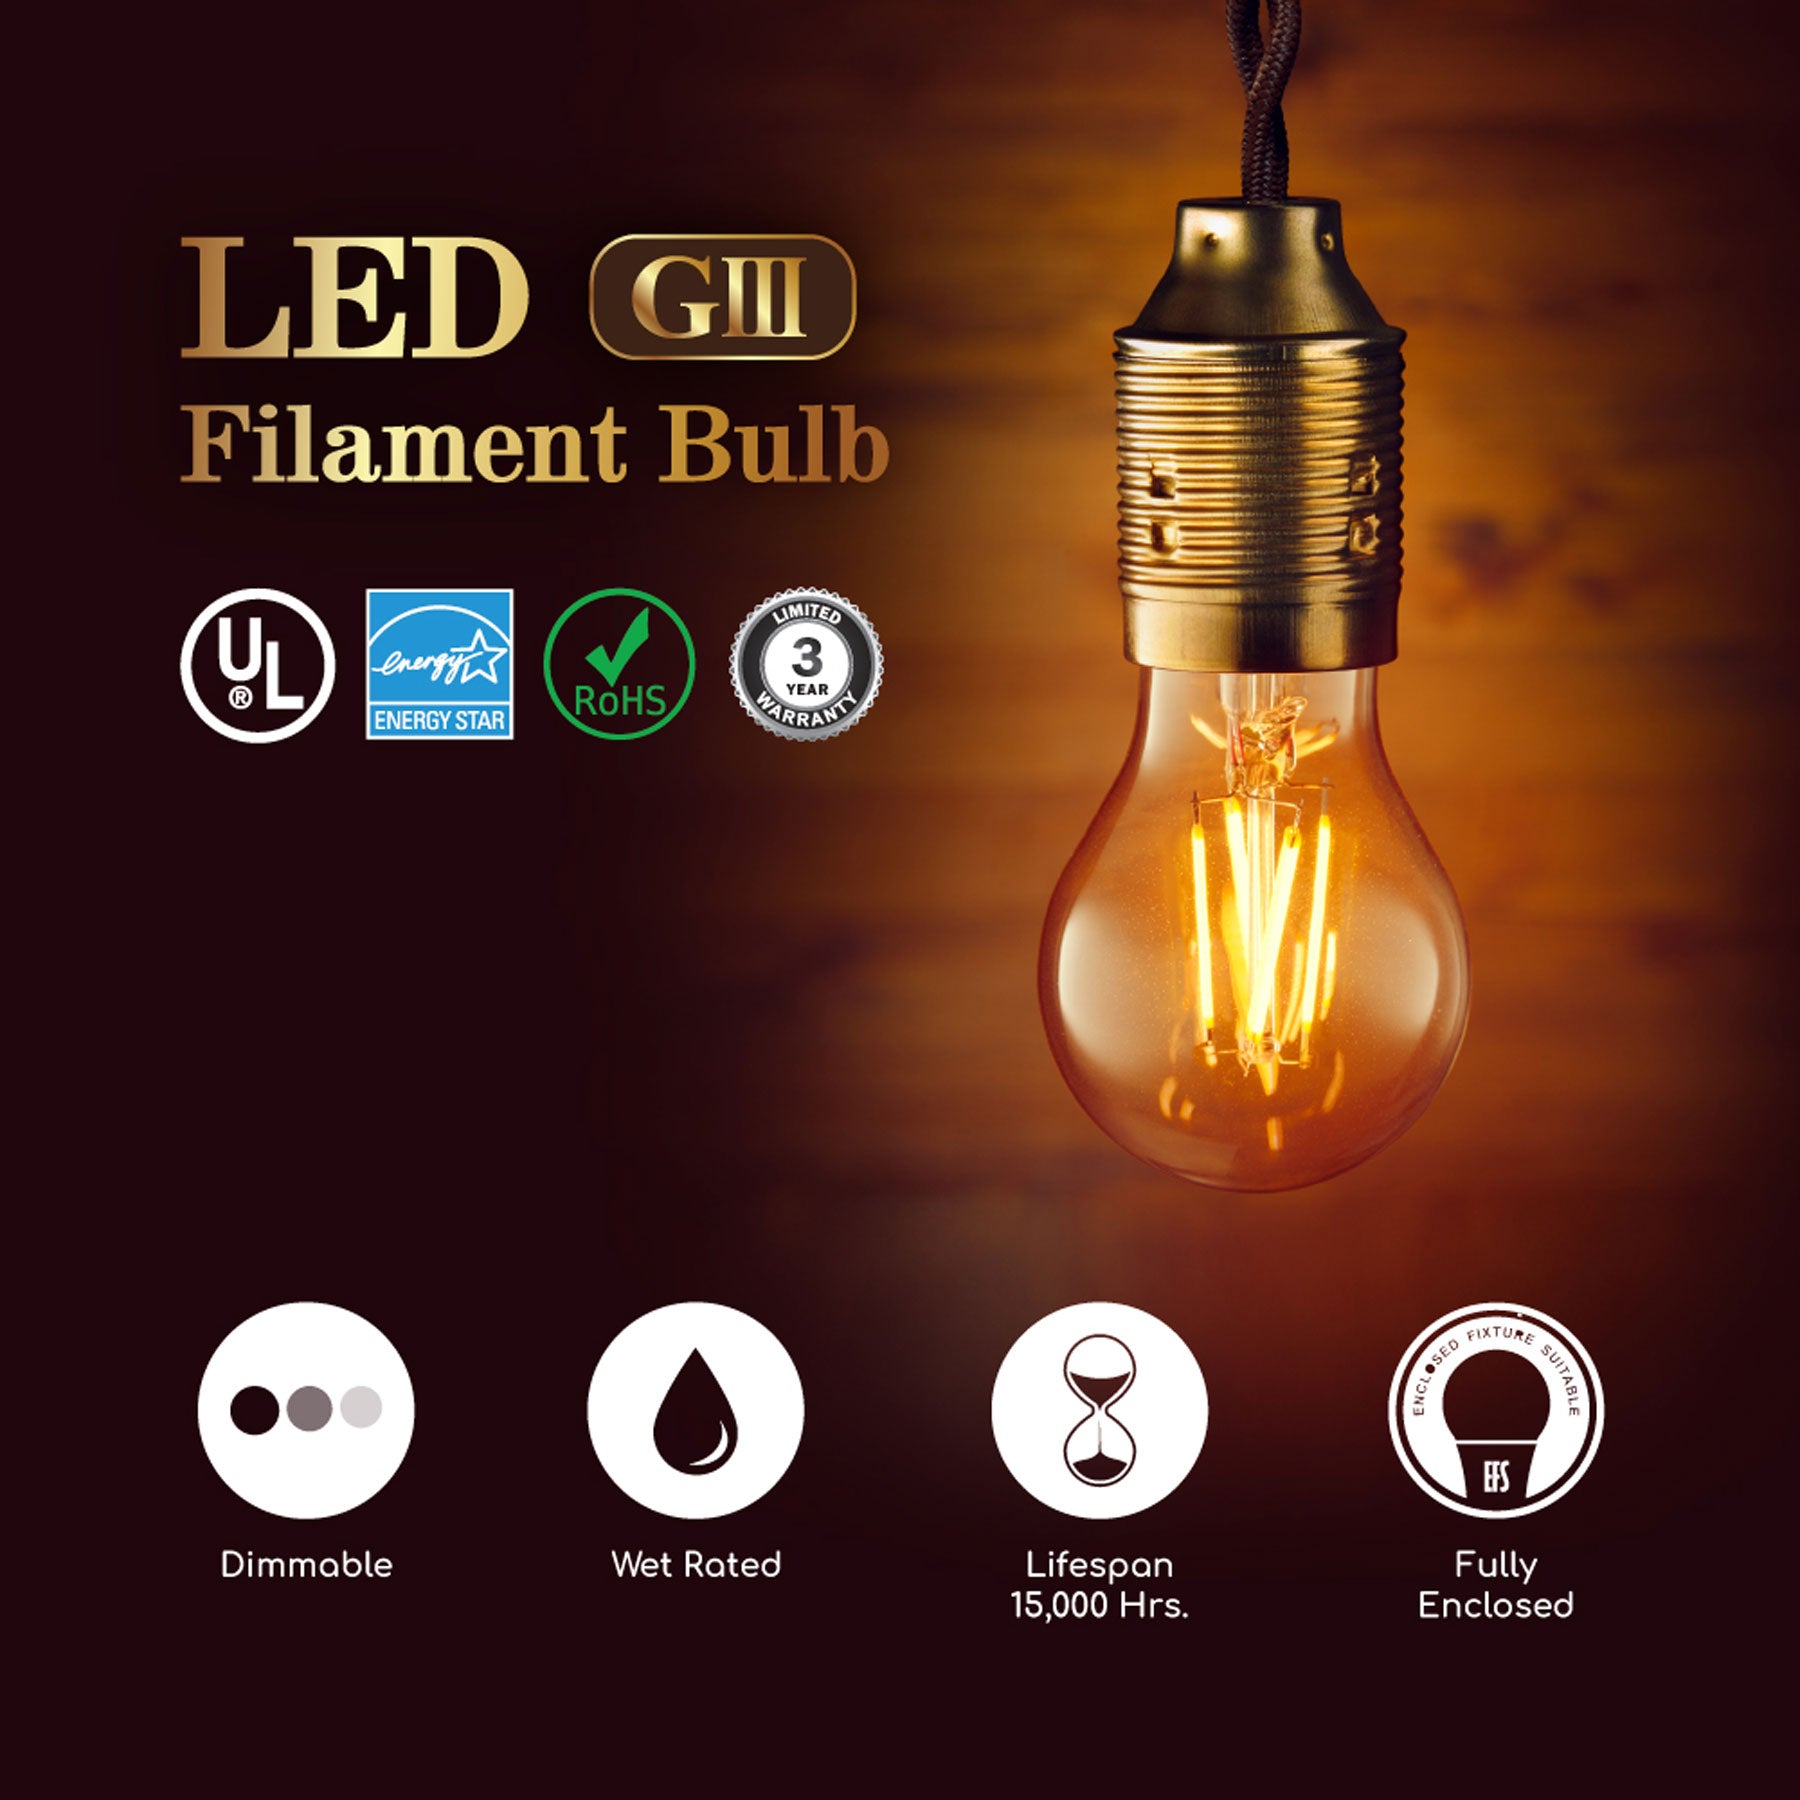 40-Watt Equivalent A15 E26 Antique Retro Filament Light Bulbs